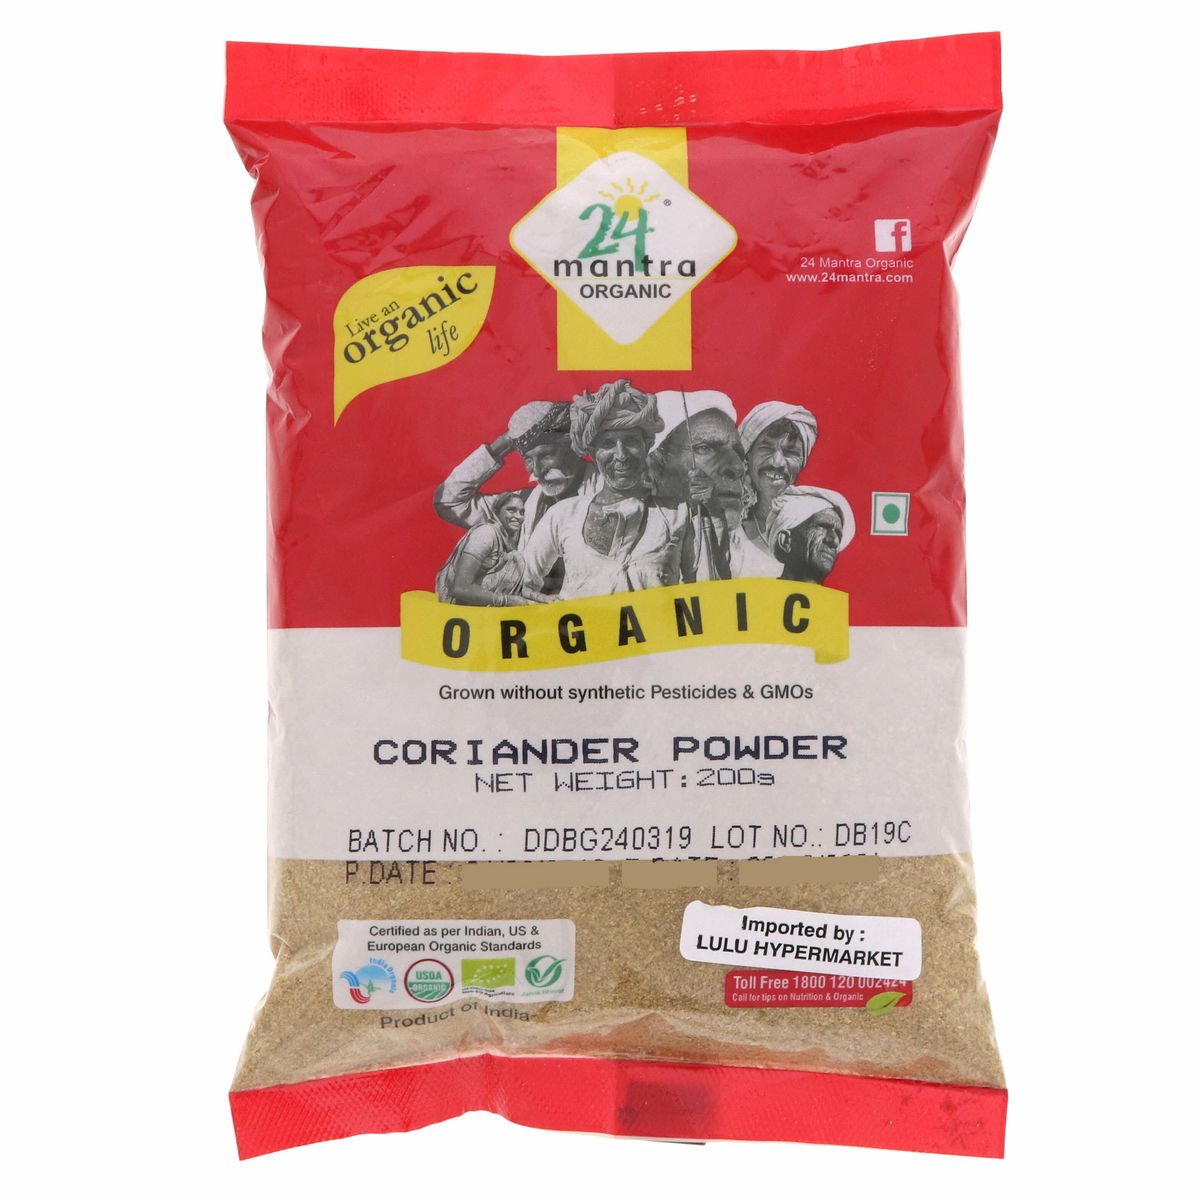 24 Mantra Organic Coriander Powder 200 g